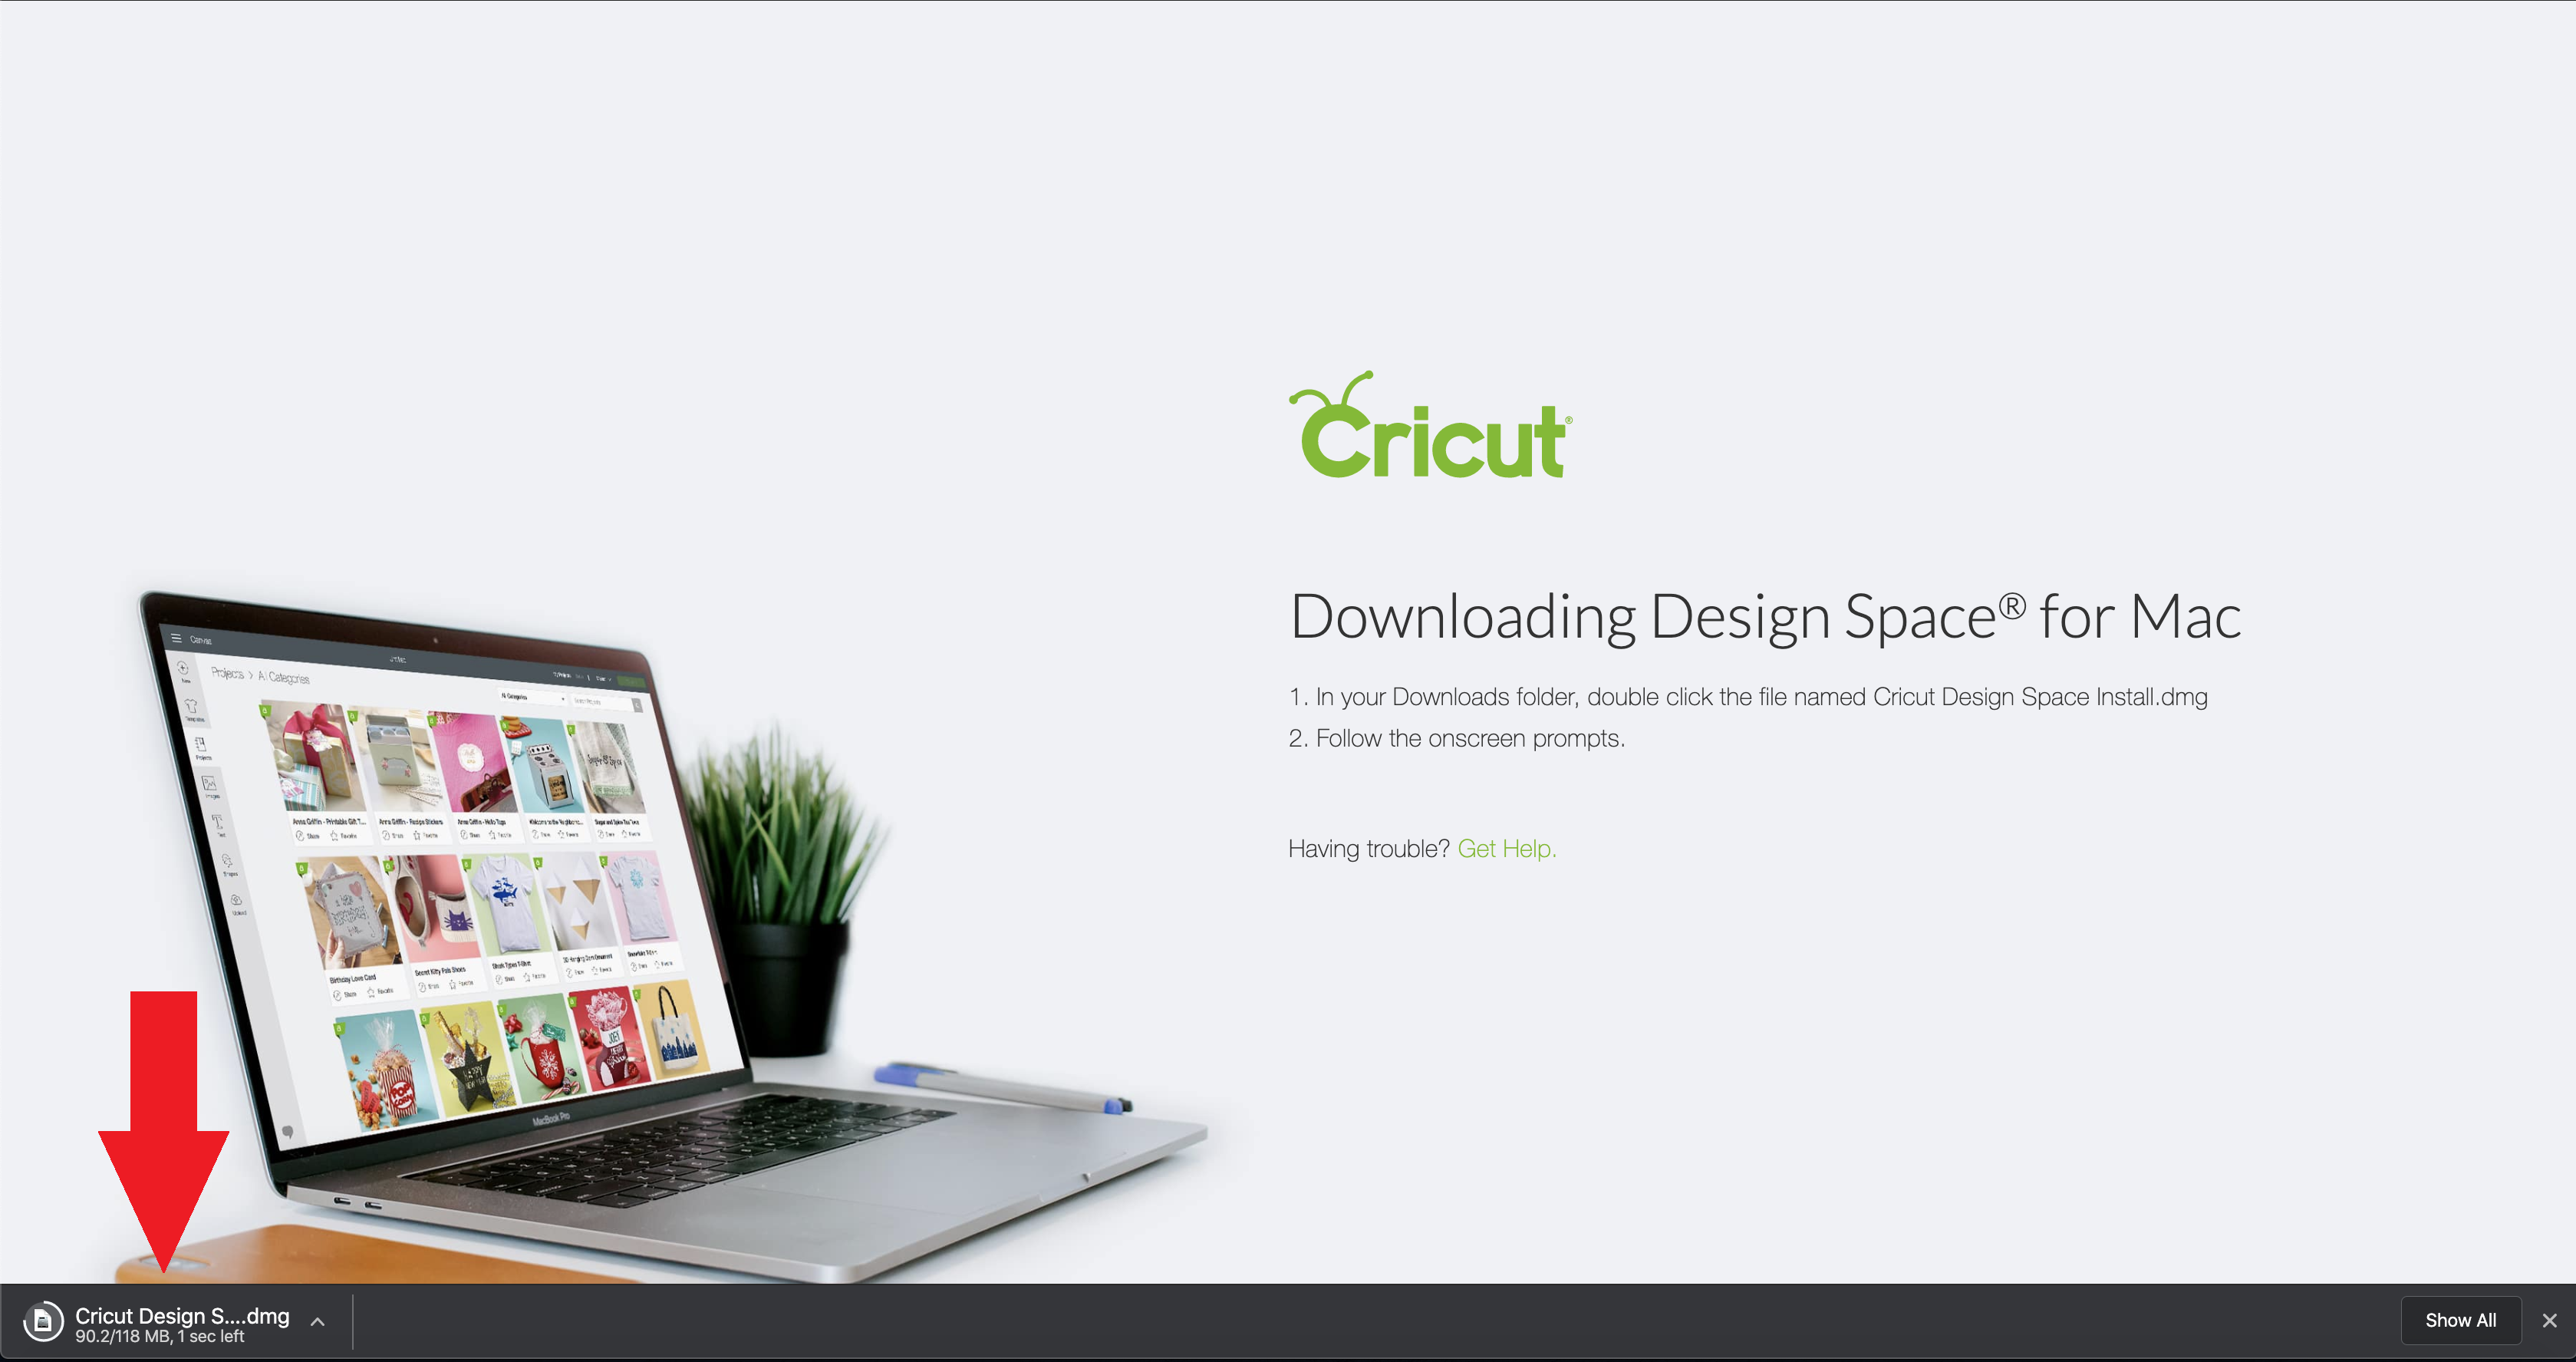 Cricut design software, free download for windows 7